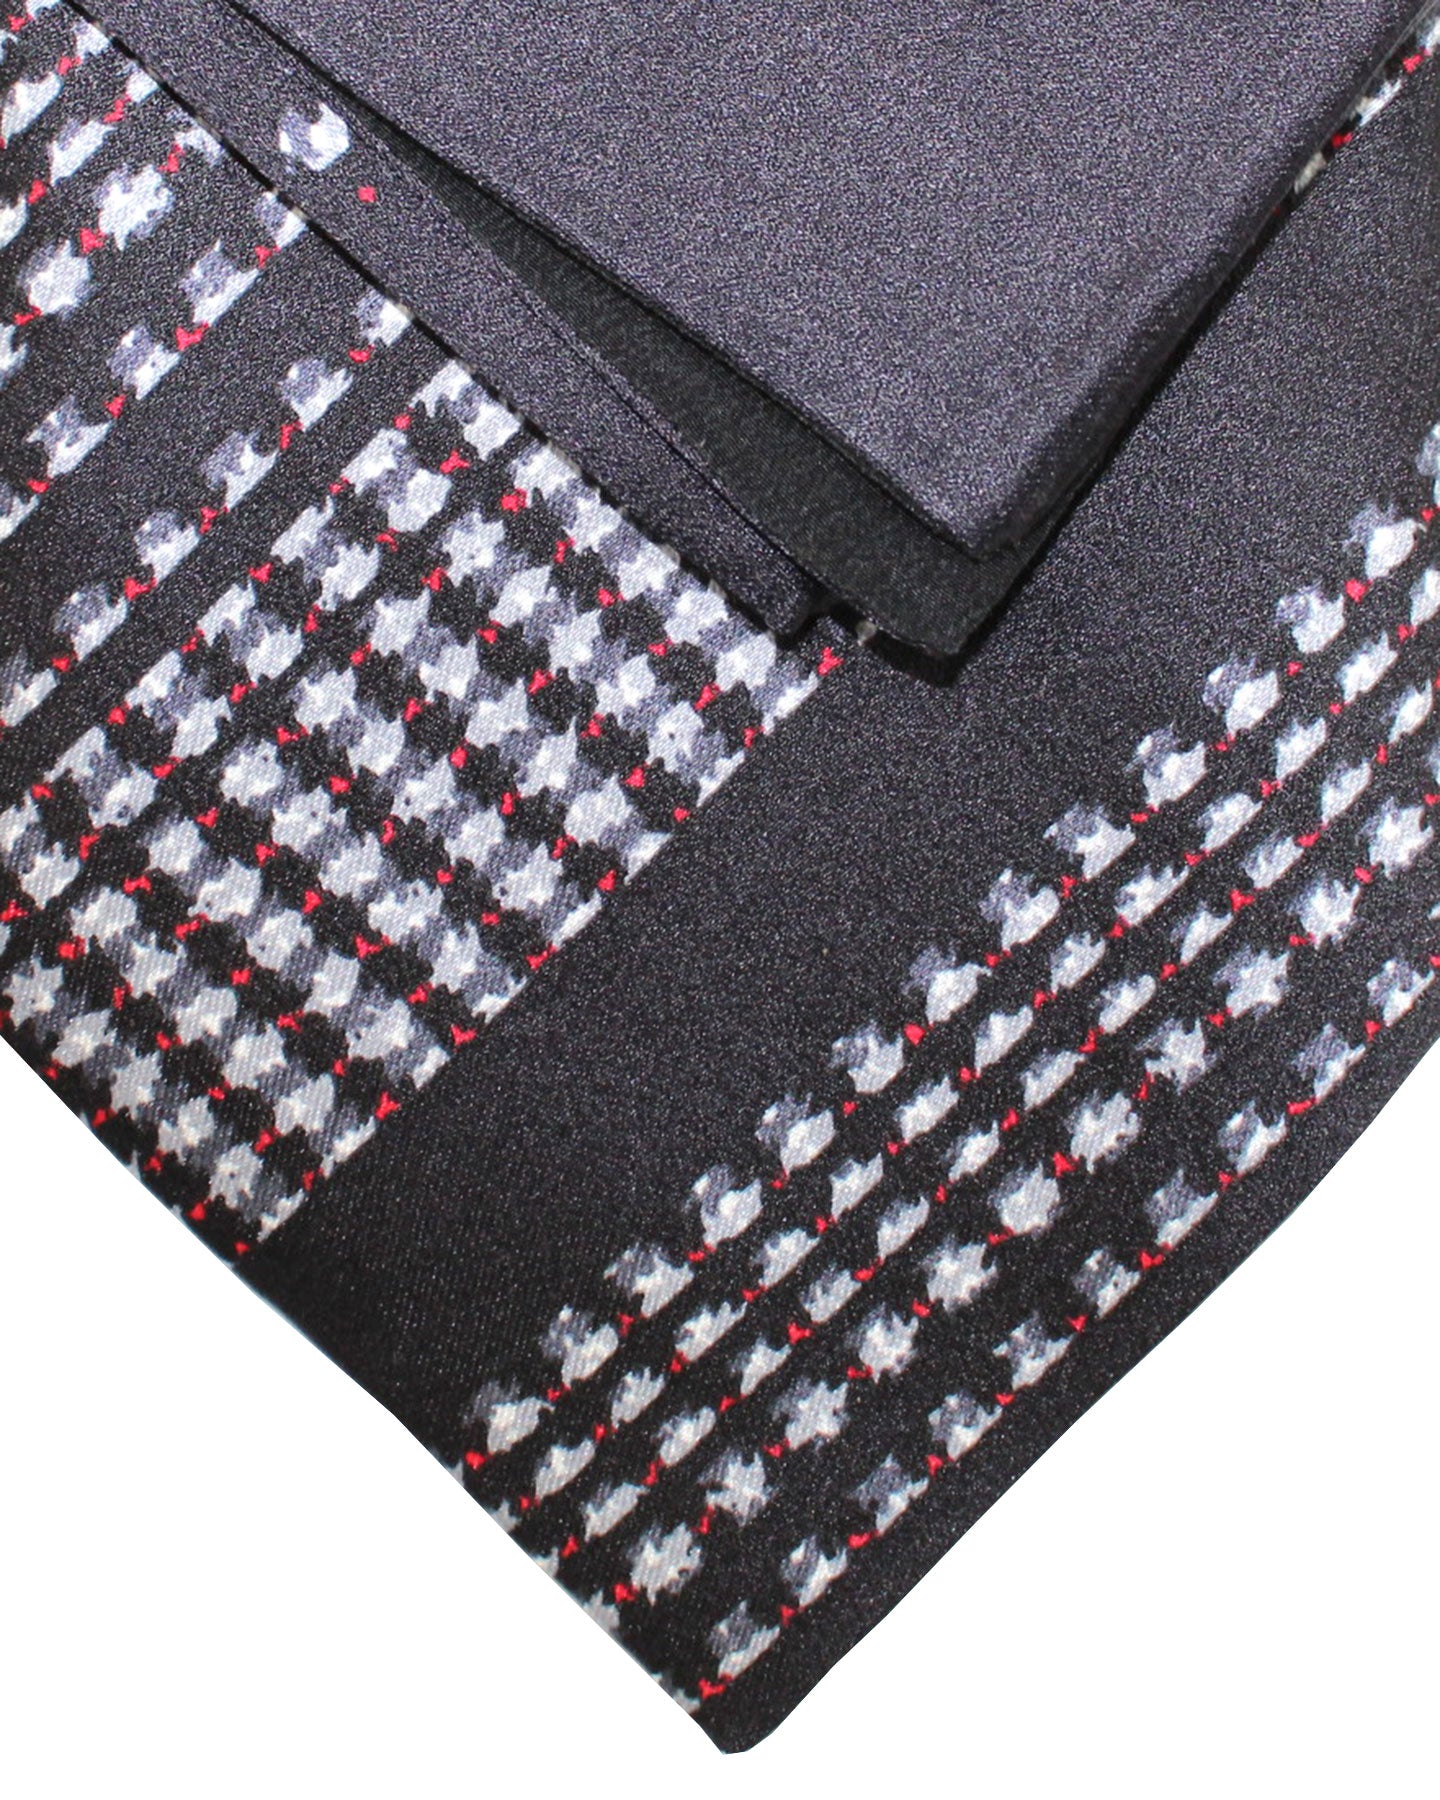 Zilli Silk Tie & Matching Pocket Square Set Black Gray Red Stripes